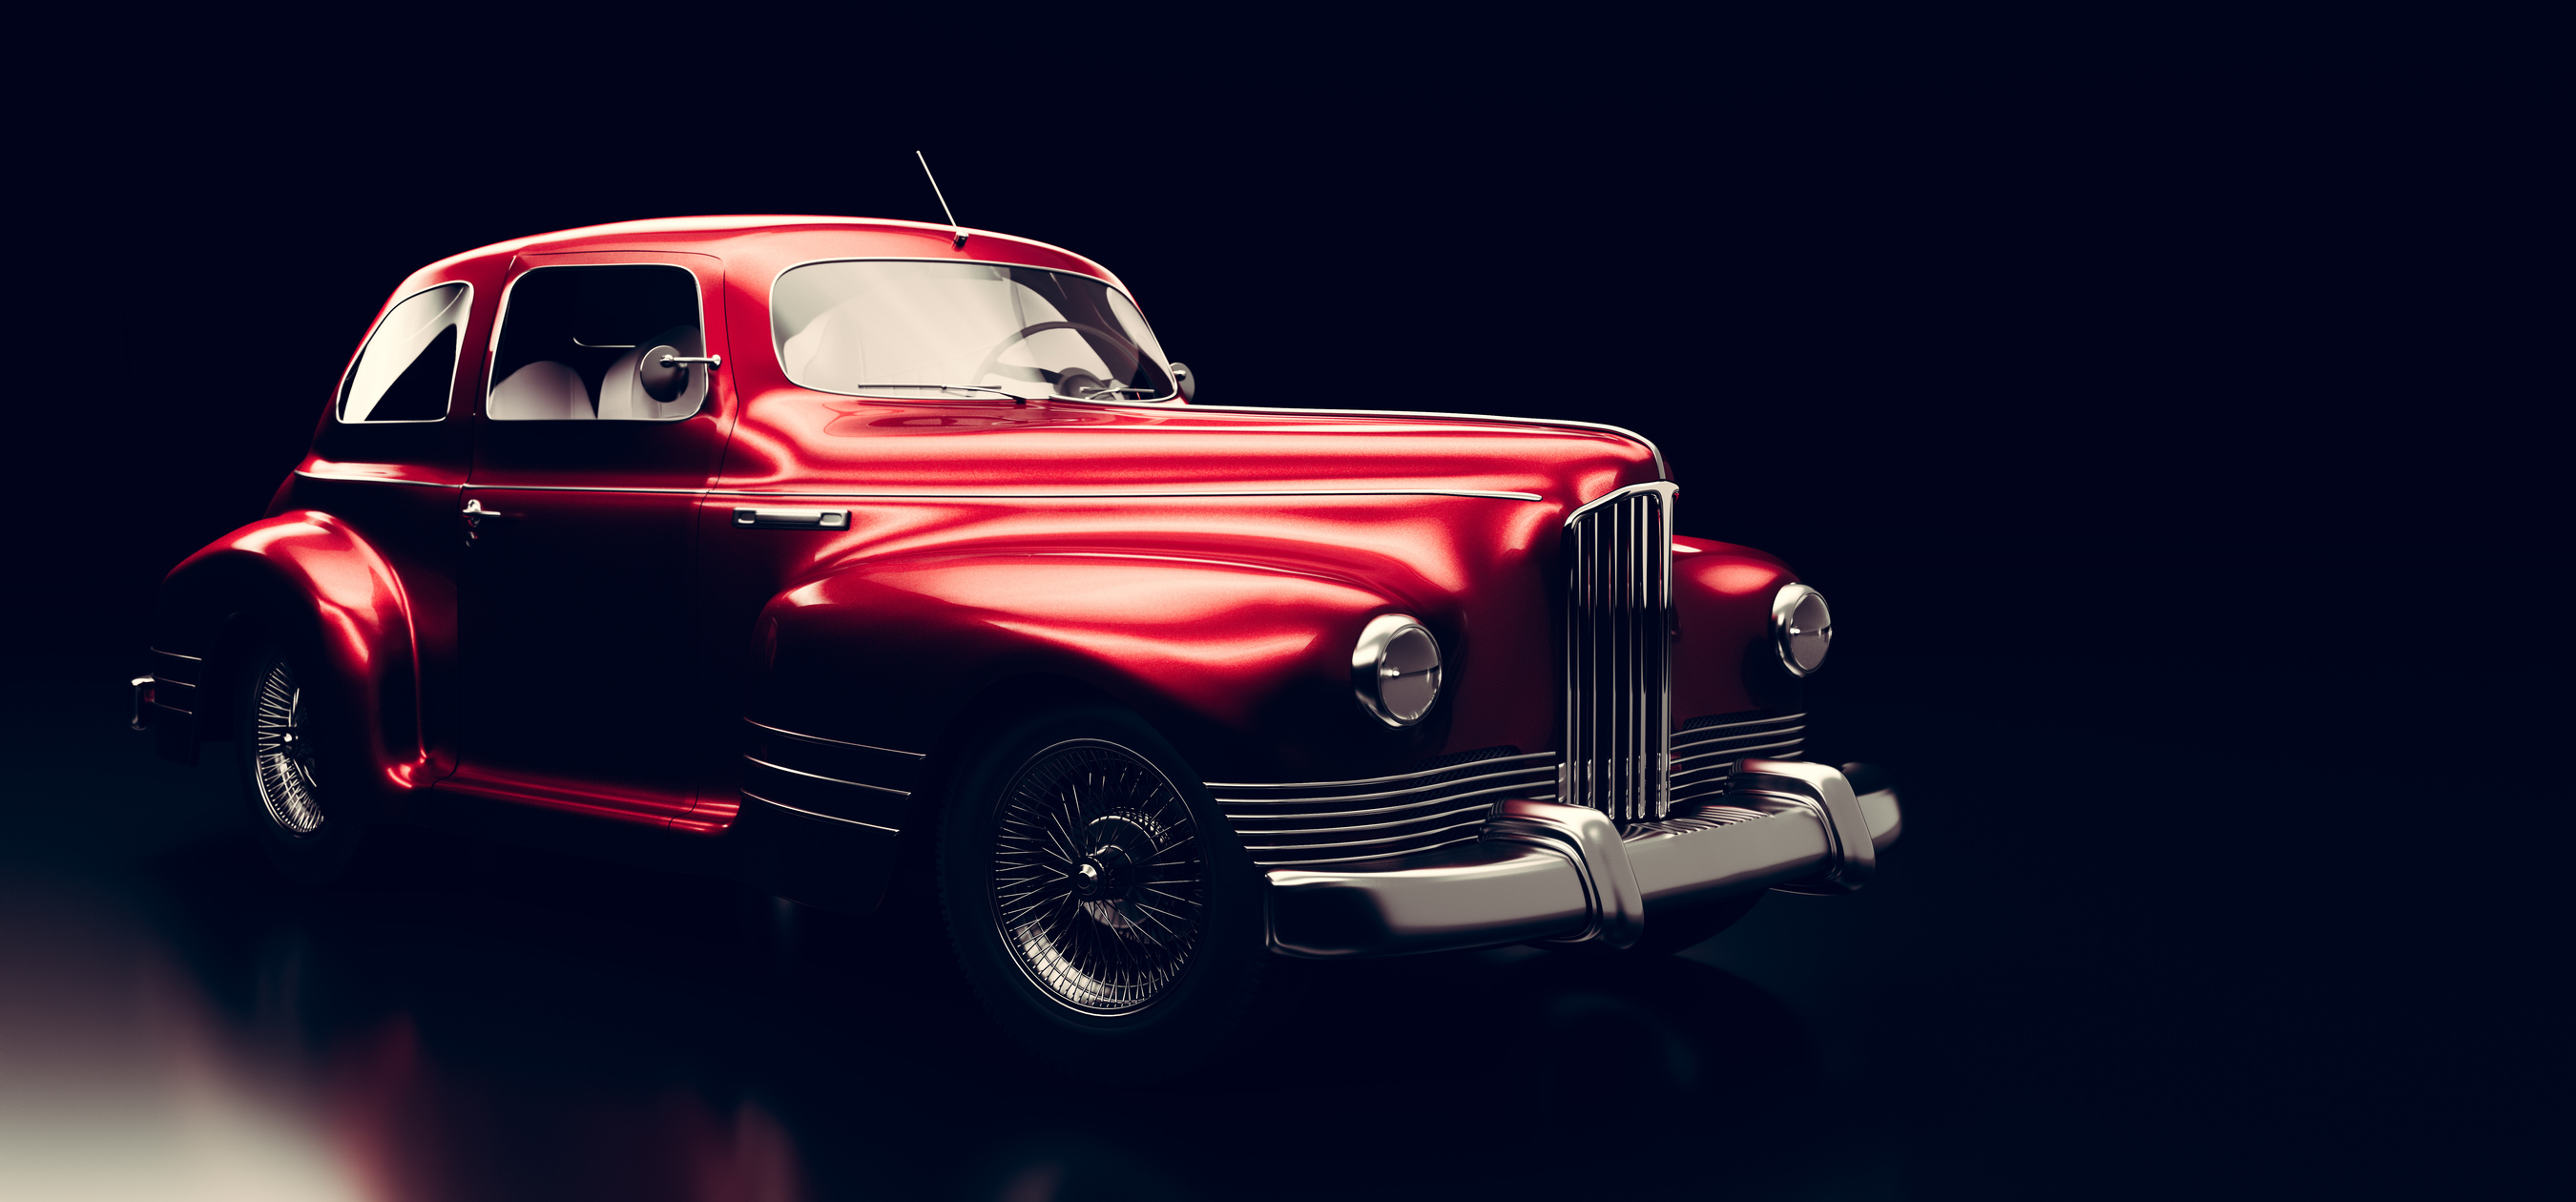 Red Vintage Car